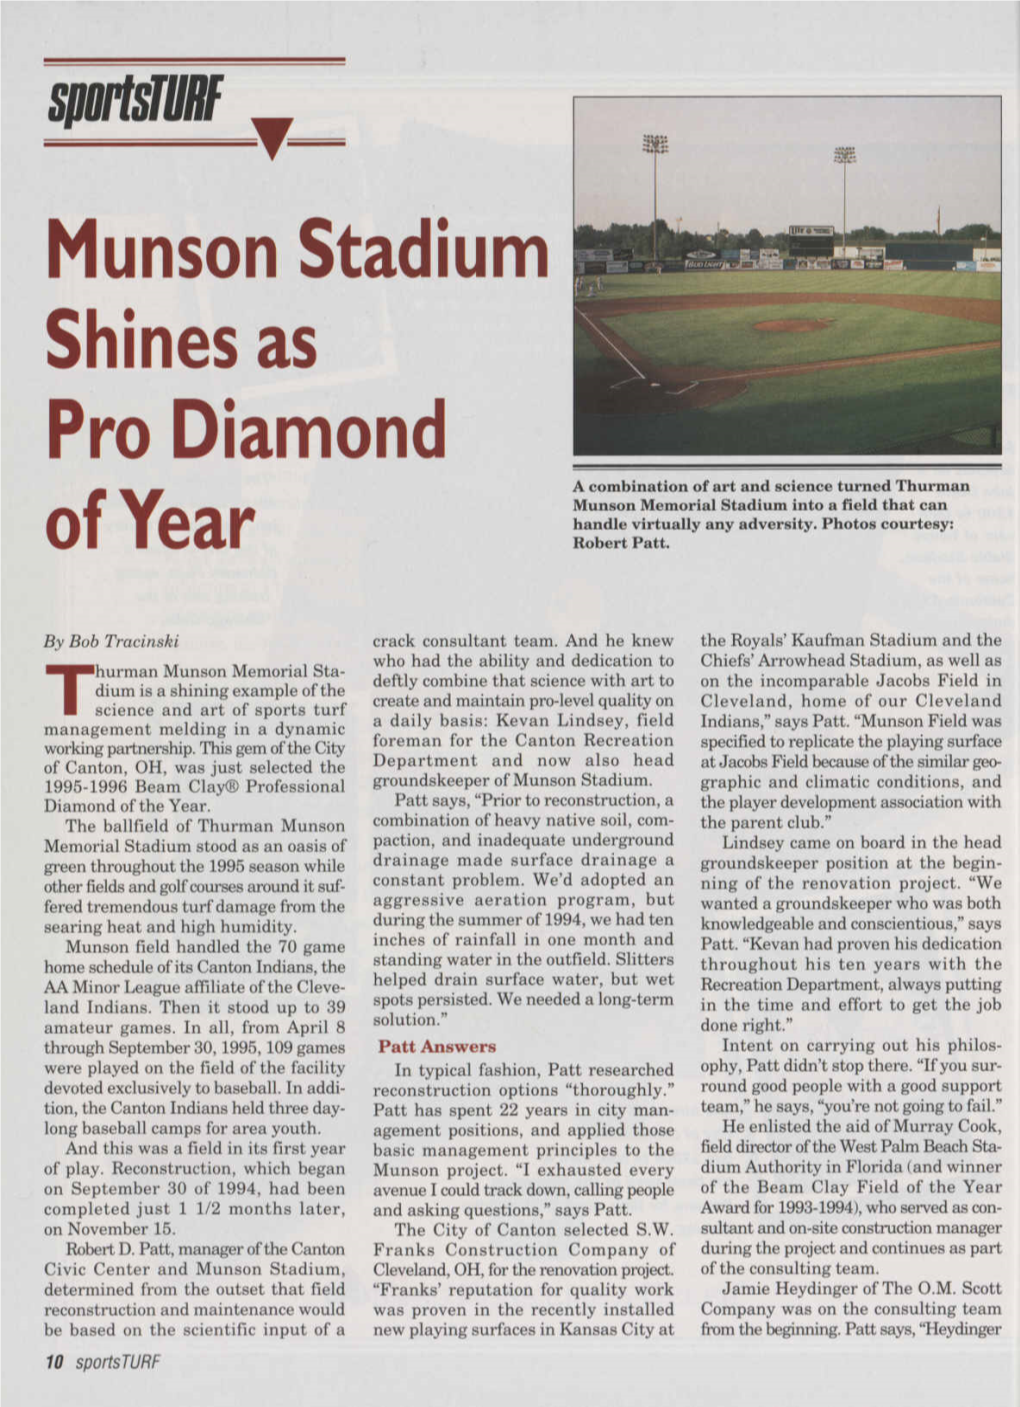 Munson Stadium Shines As Pro Diamond of Year